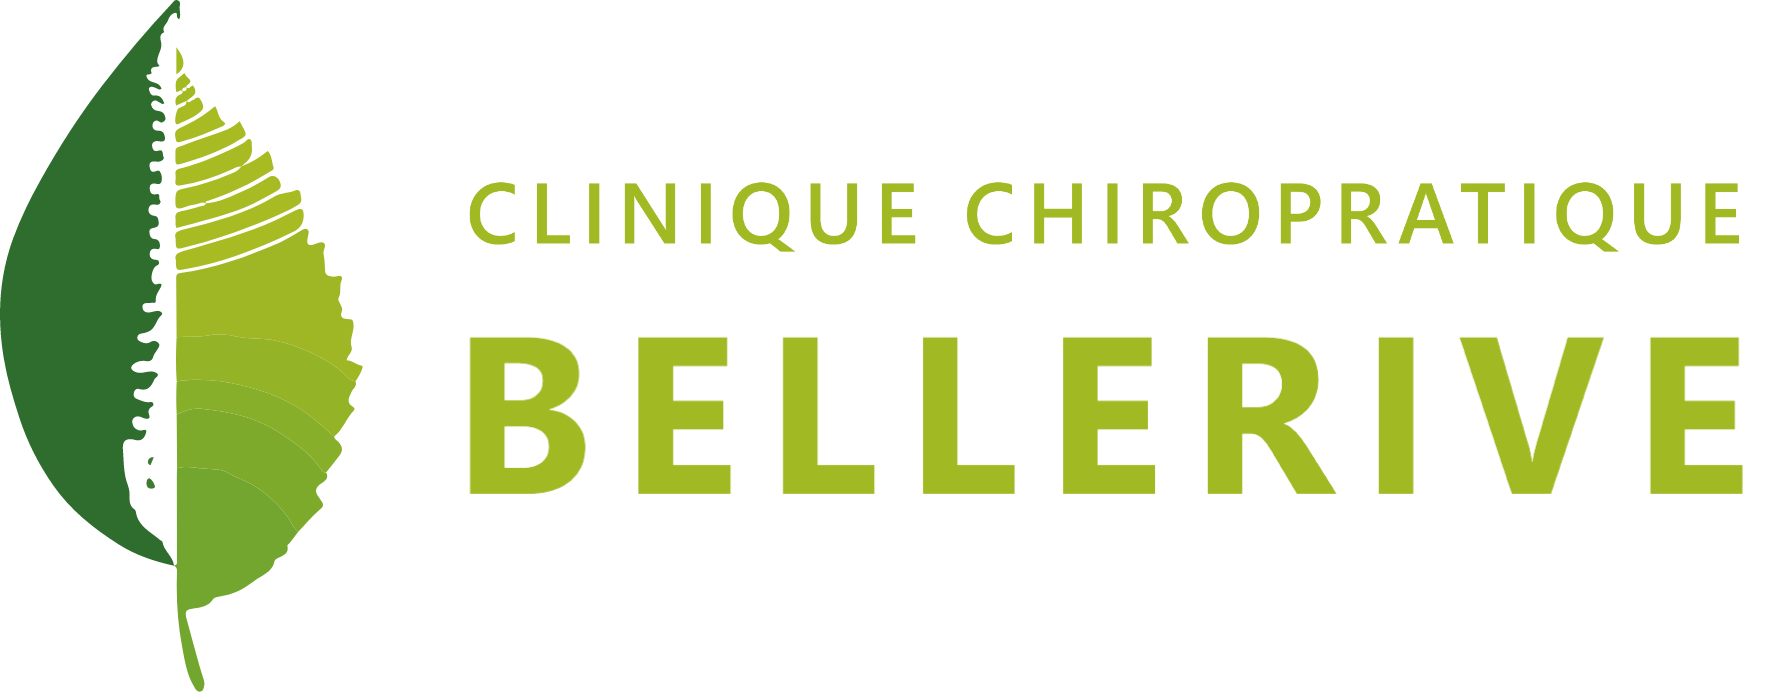 Clinique Chiropratique Bellerive - Logo